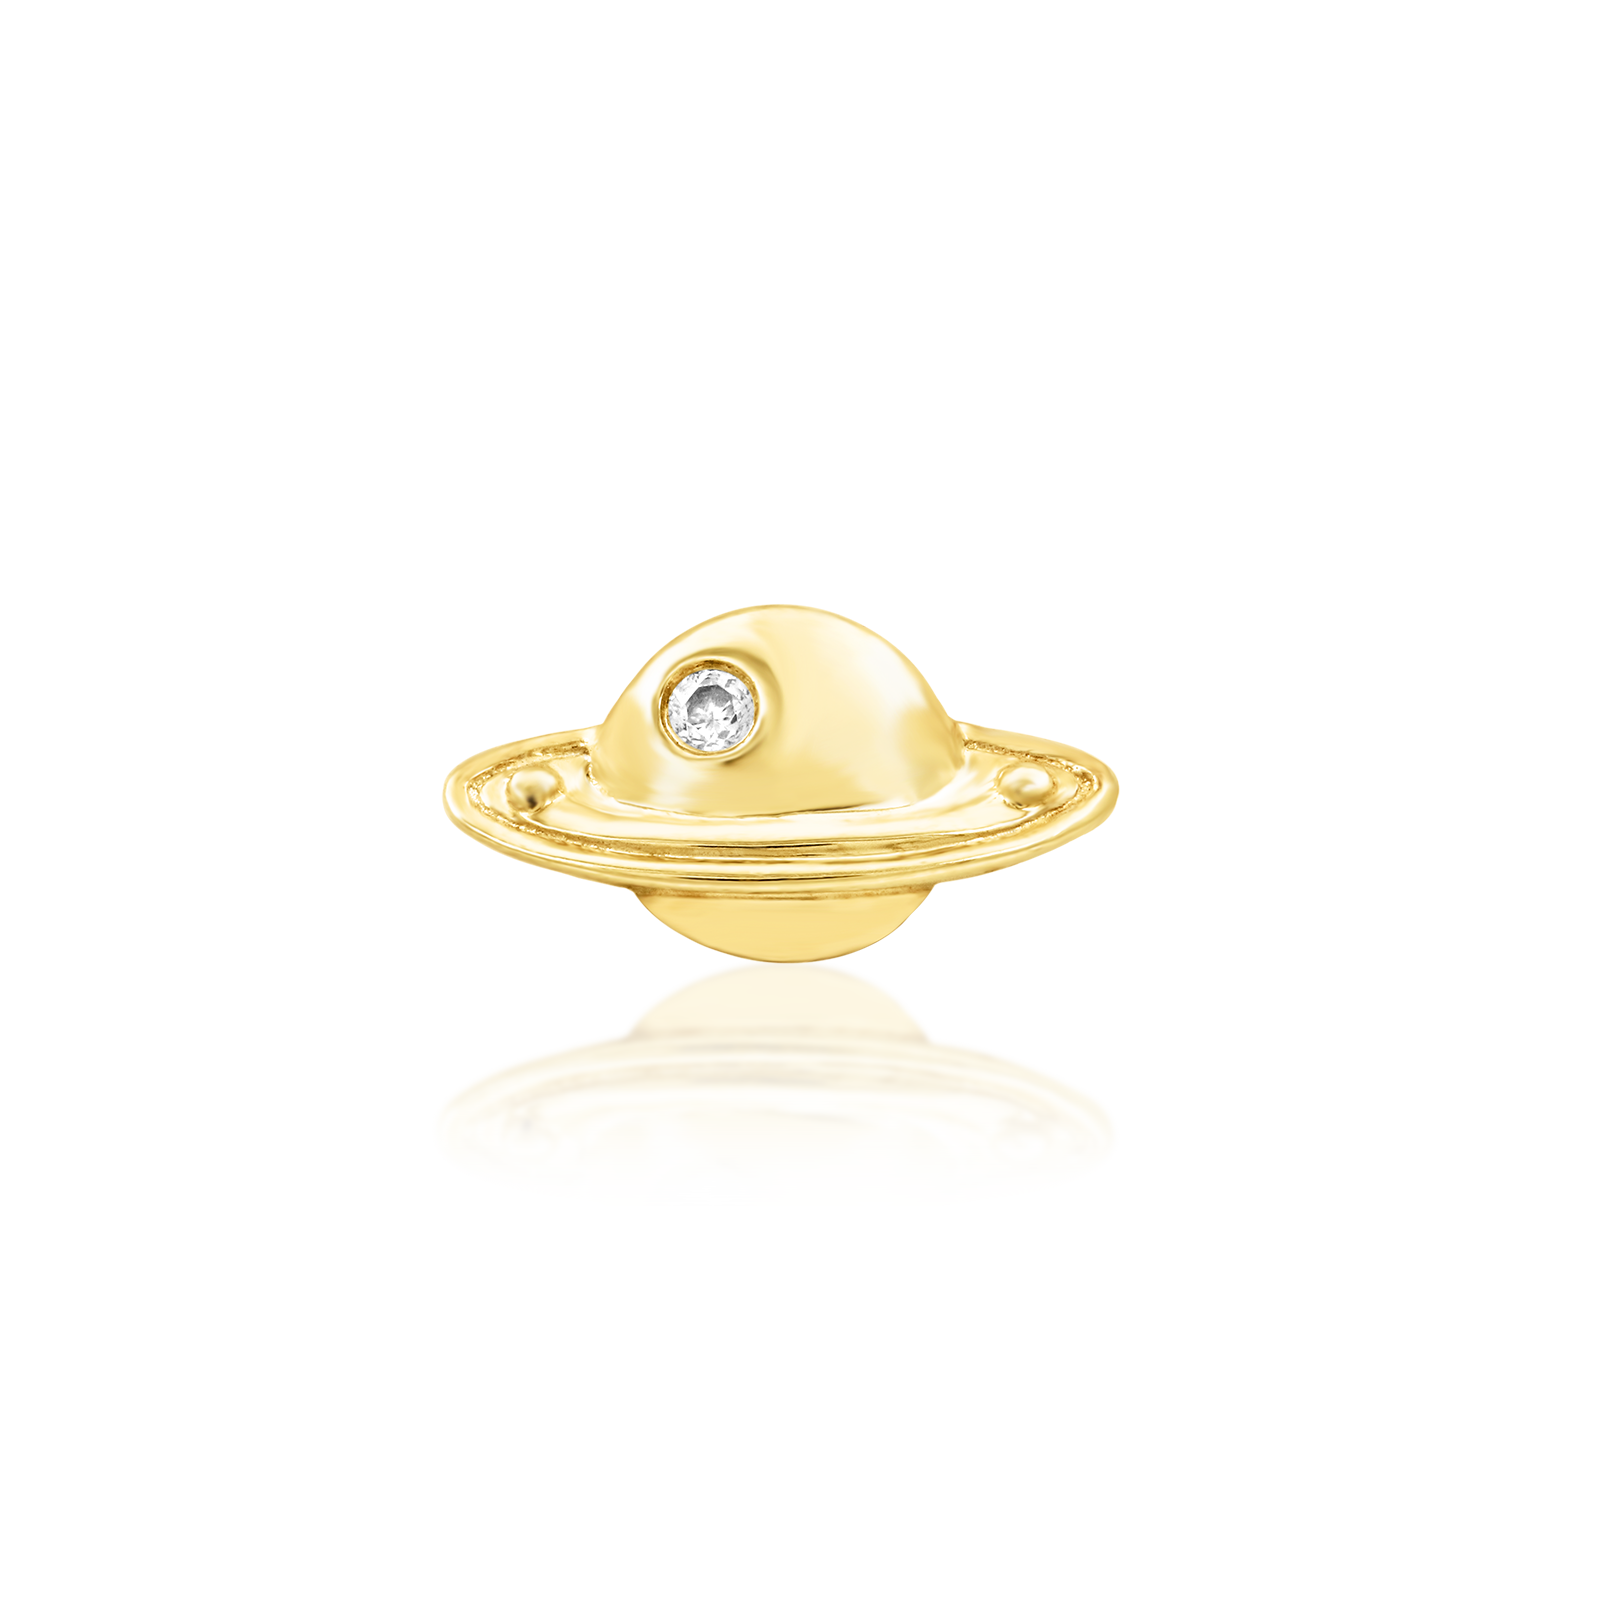 Saturn in 14k Gold by Junipurr